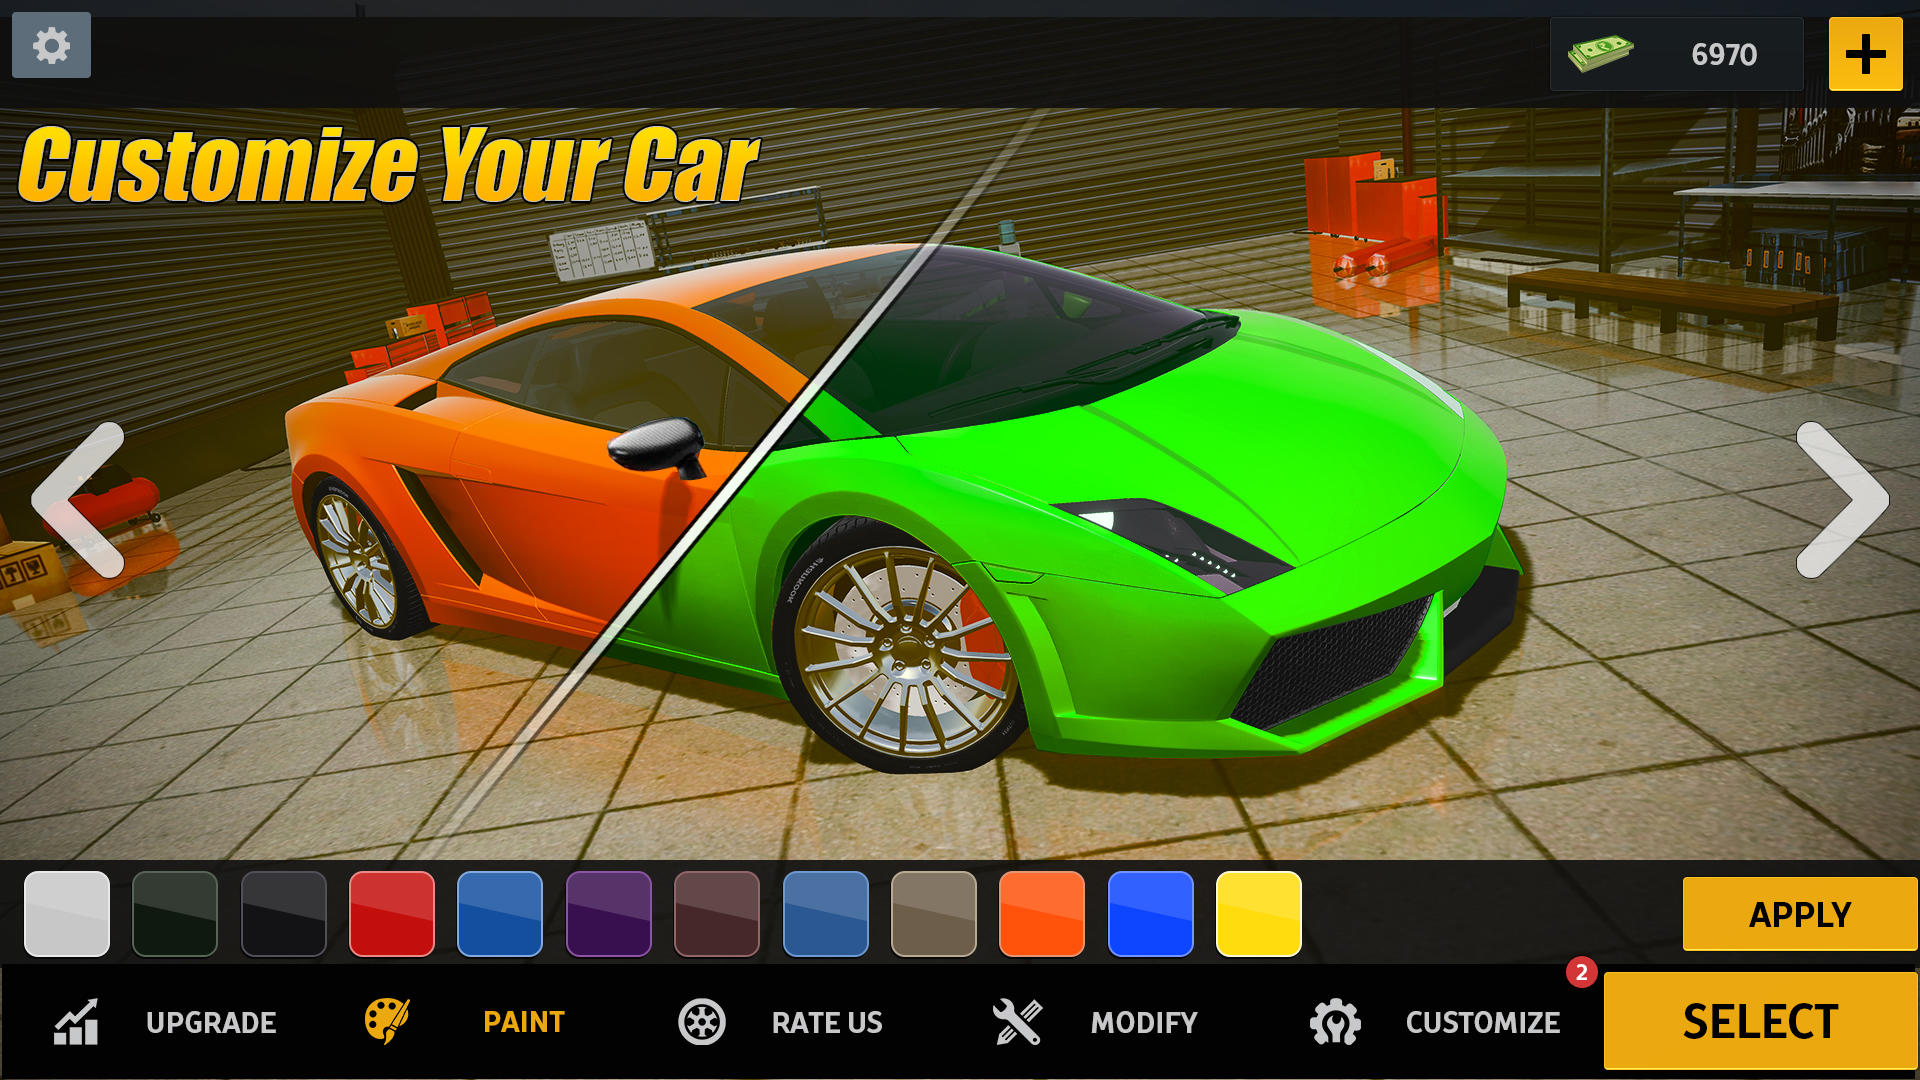 Race Master 3D - Car Racing for iOS Game Reviews